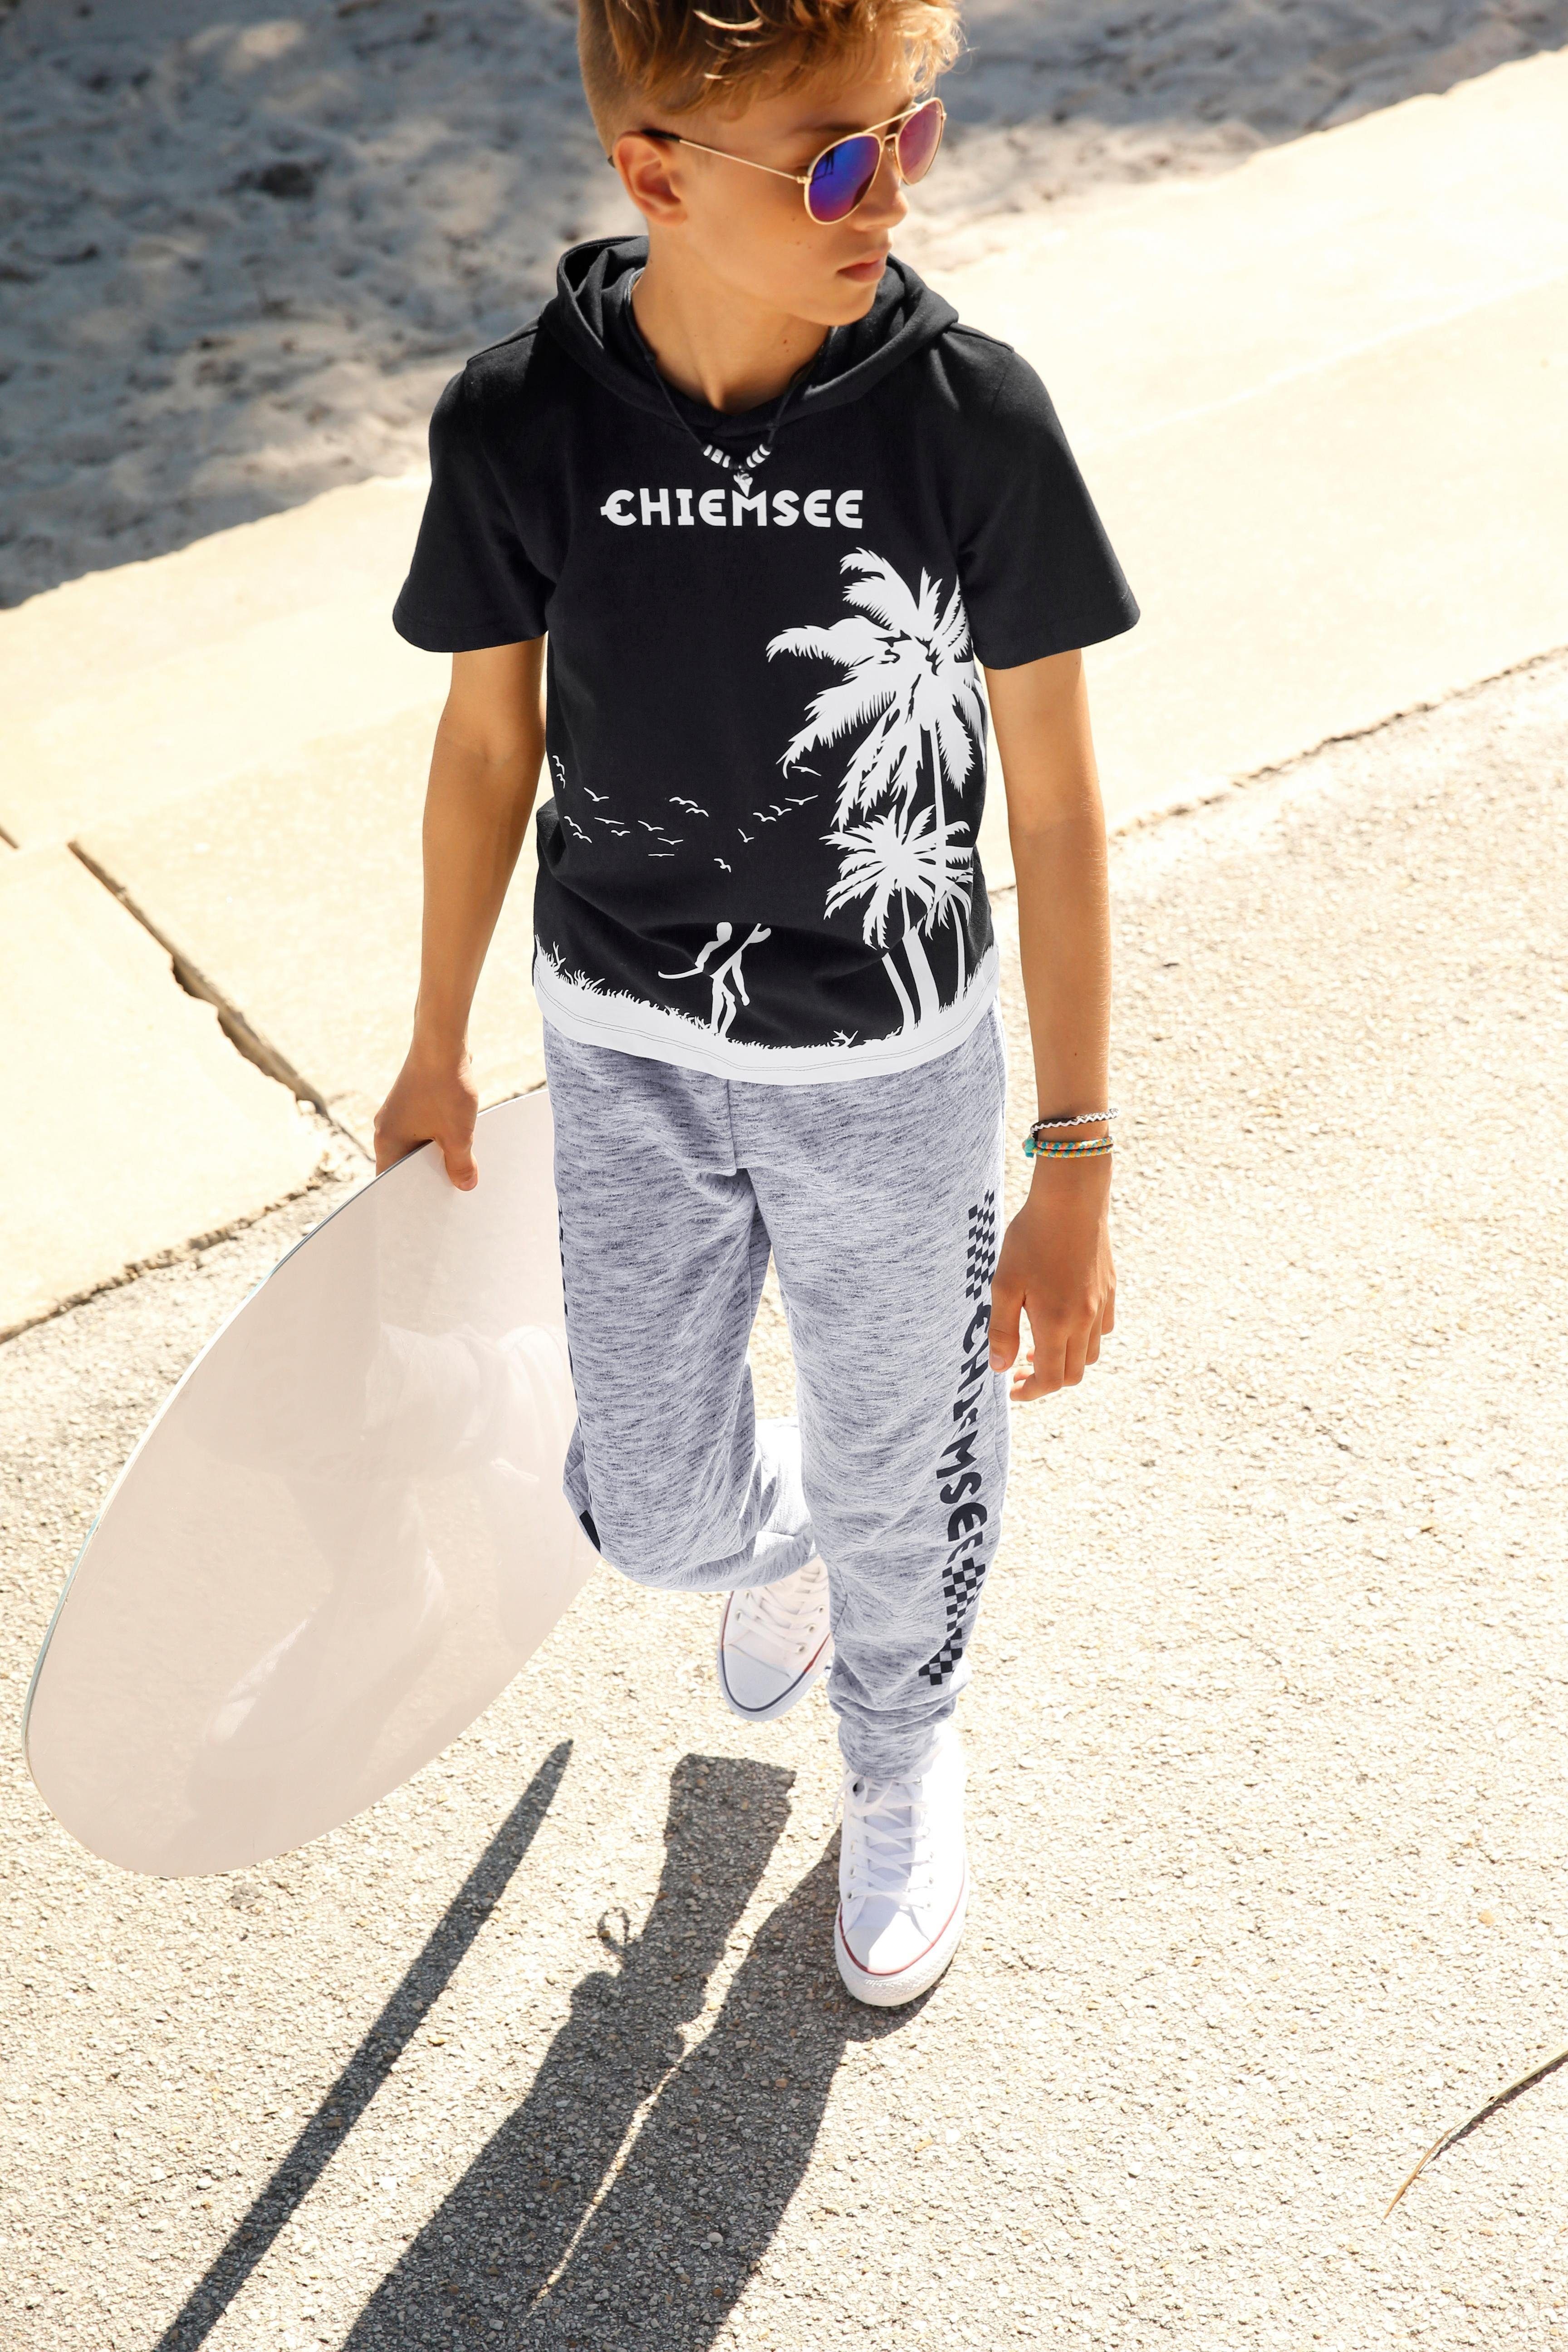 Chiemsee T-Shirt mit Palmendruck